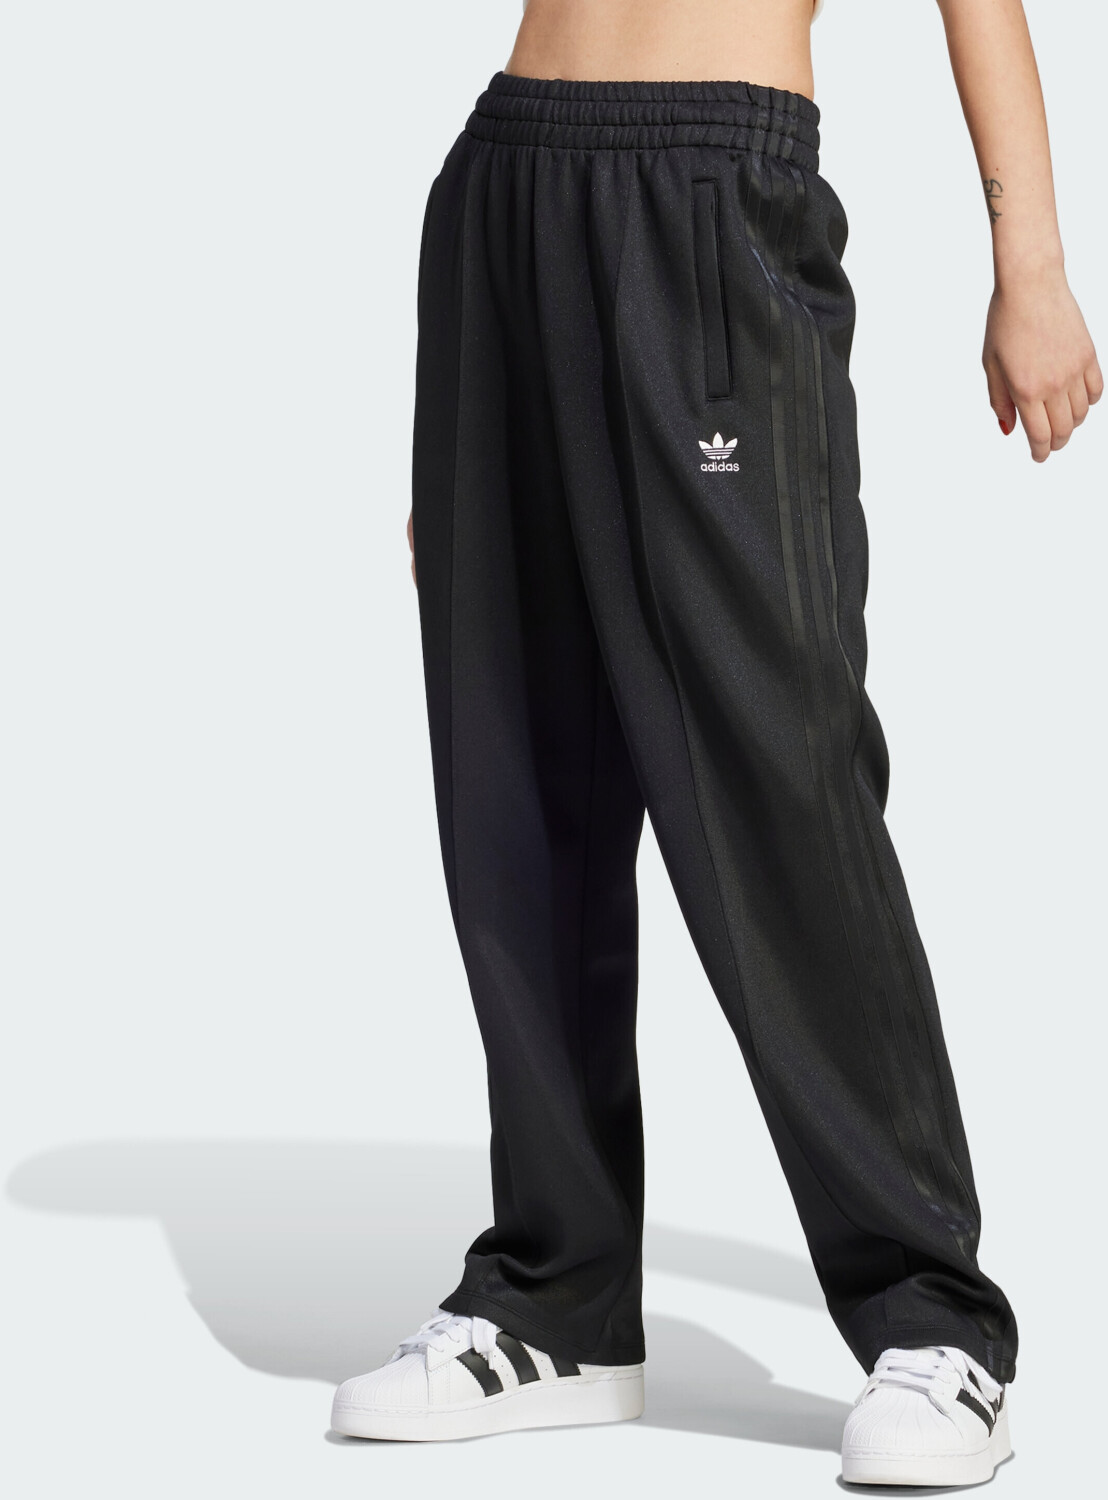 Pants Training Classics 44,99 black adicolor Woman € Preisvergleich | SST (IK6505) Adidas bei ab Oversized